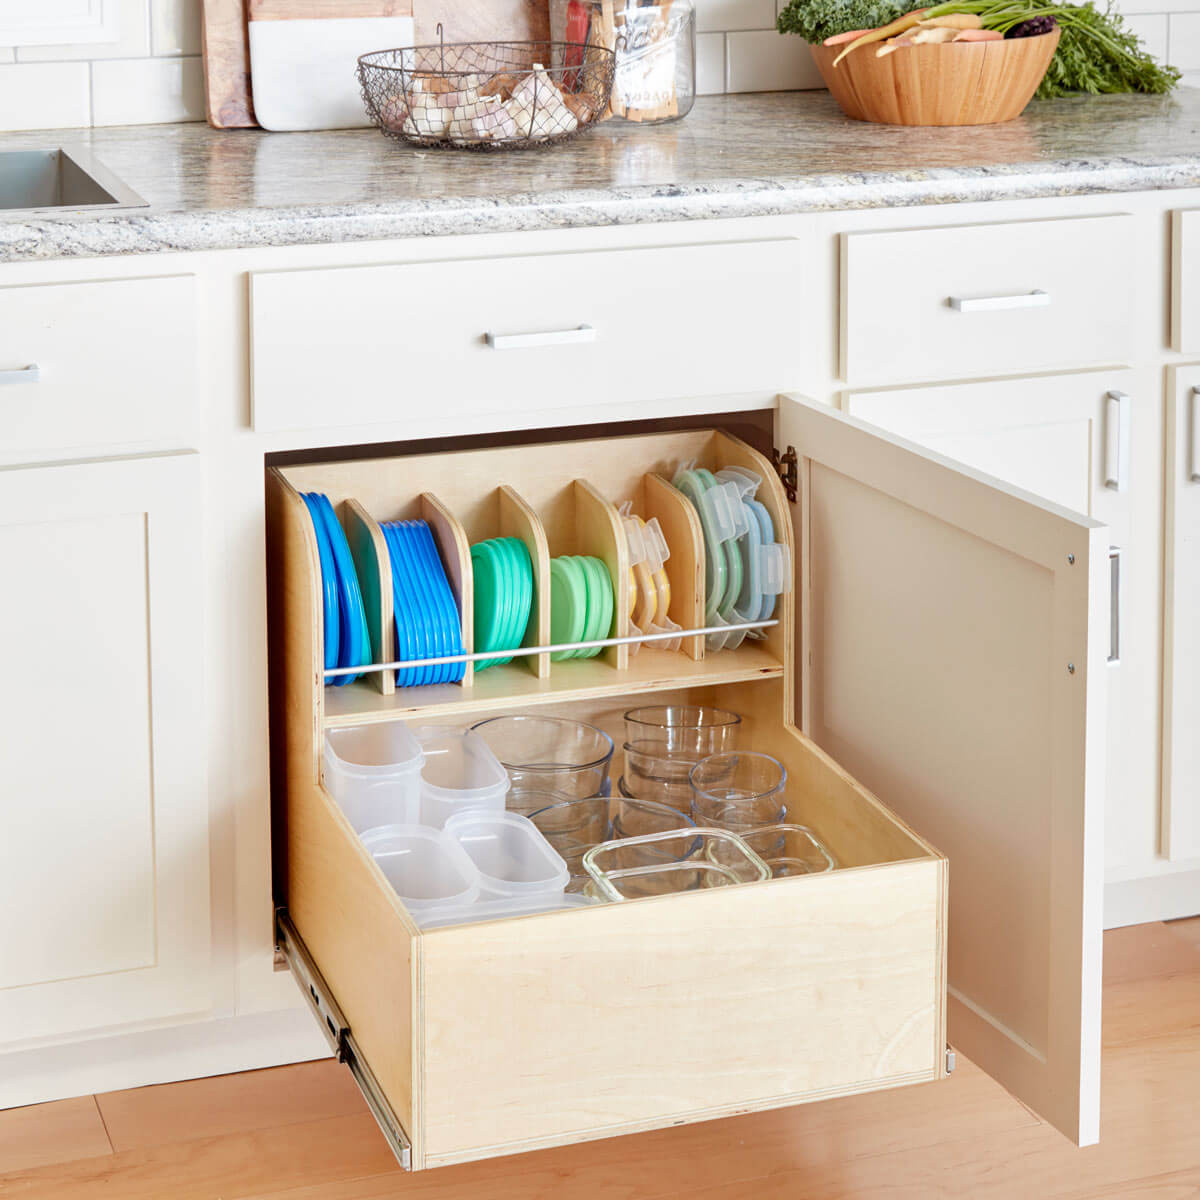 Diy Kitchen Cabinet Organizers
 30 Cheap Kitchen Cabinet Add s You Can DIY